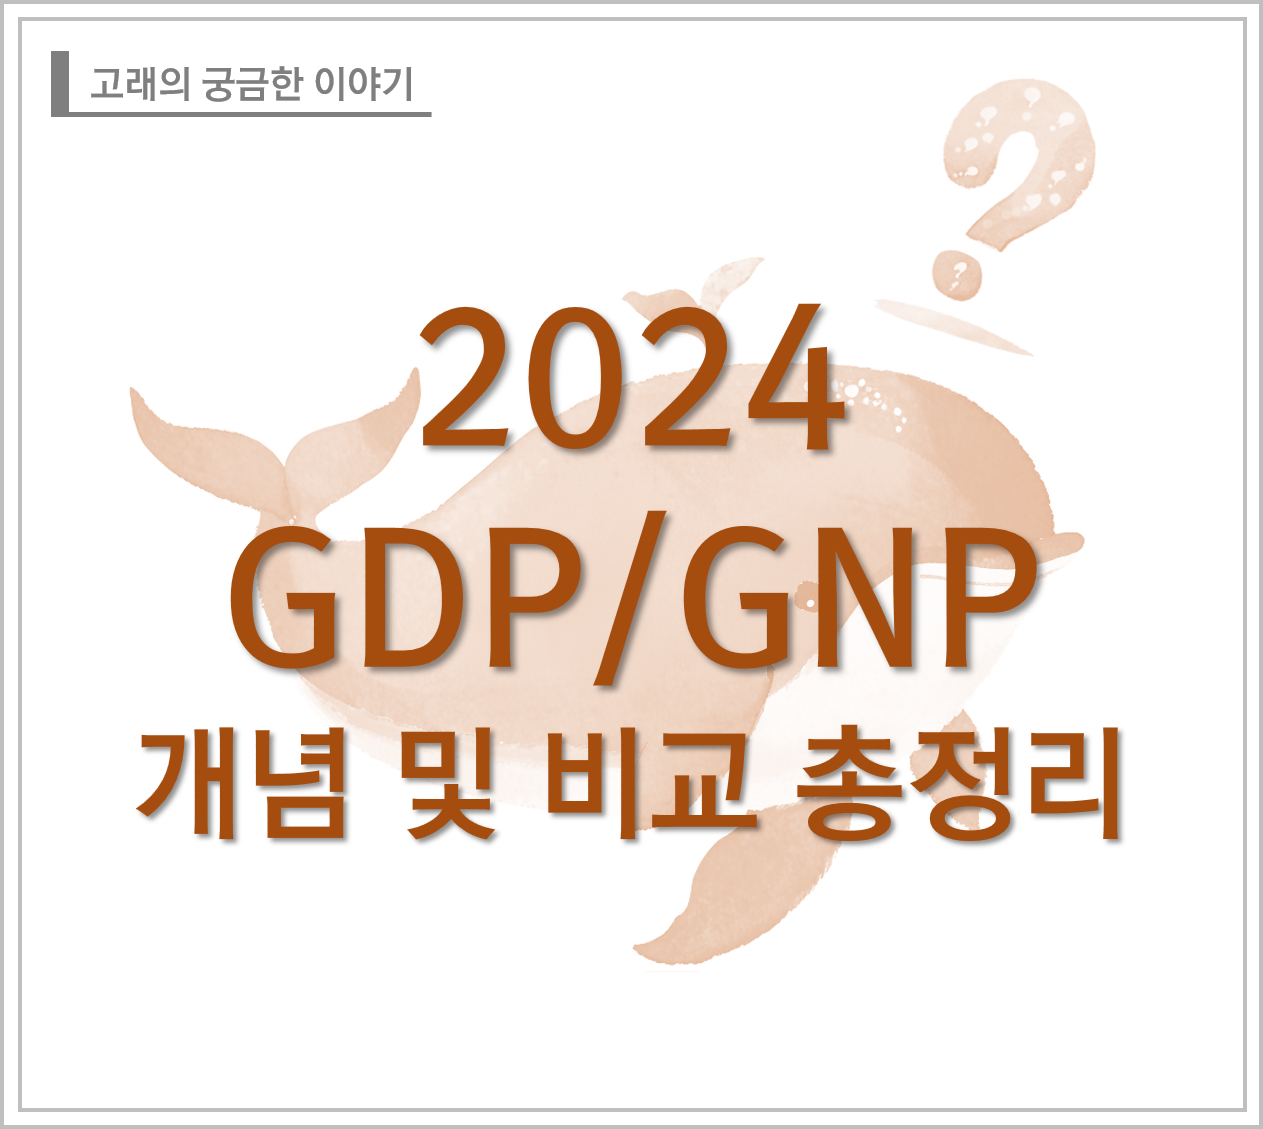 GDP GNP